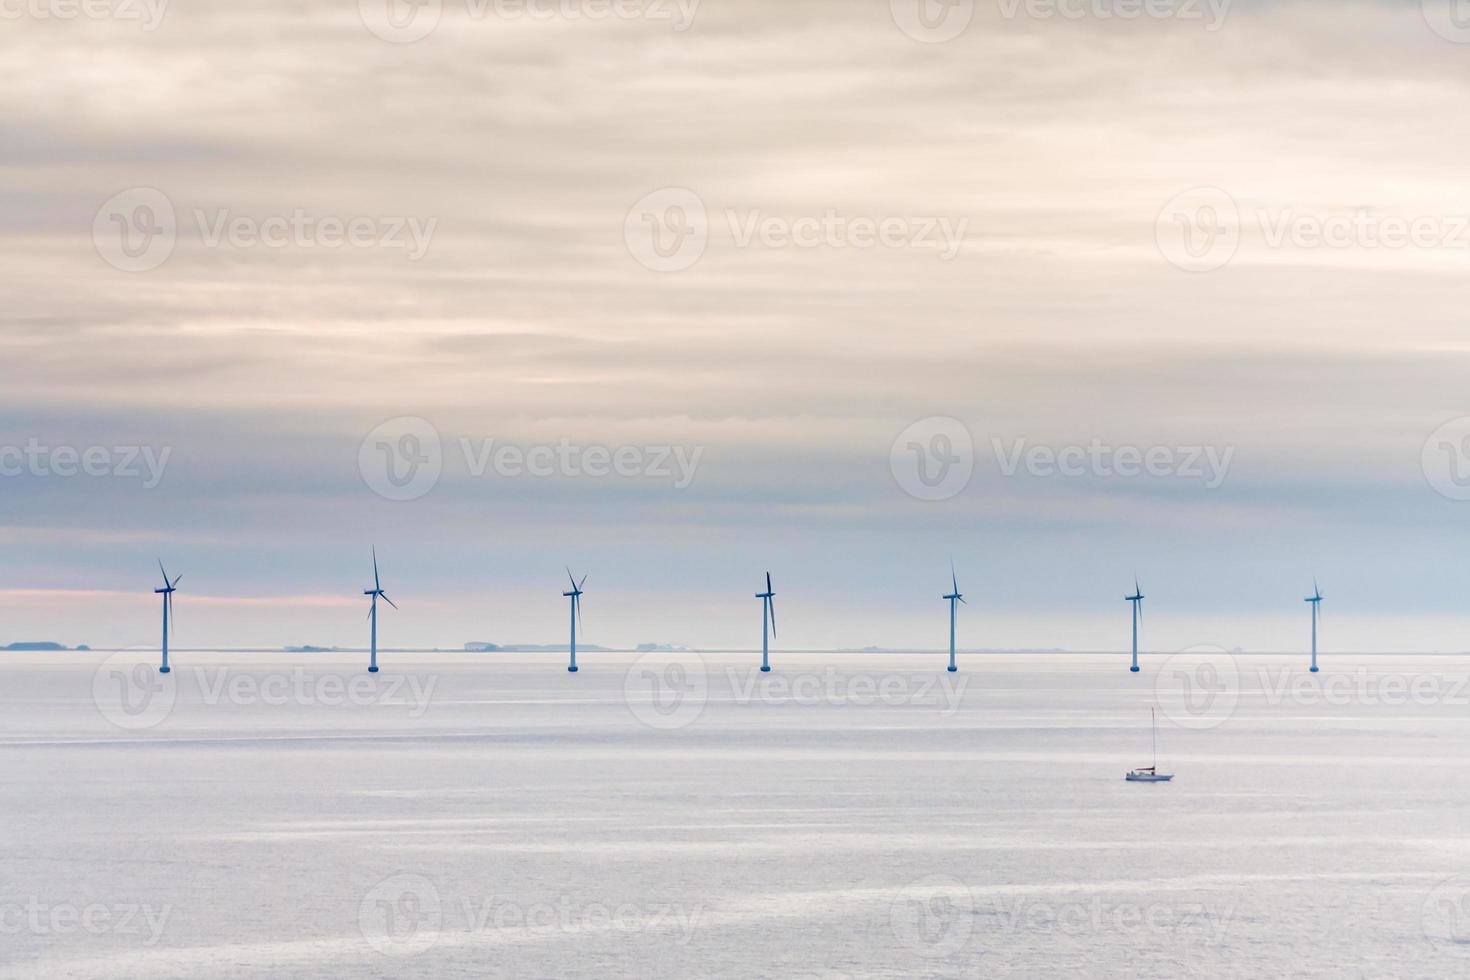 offshore wind boerderij Bij vroeg ochtend- foto